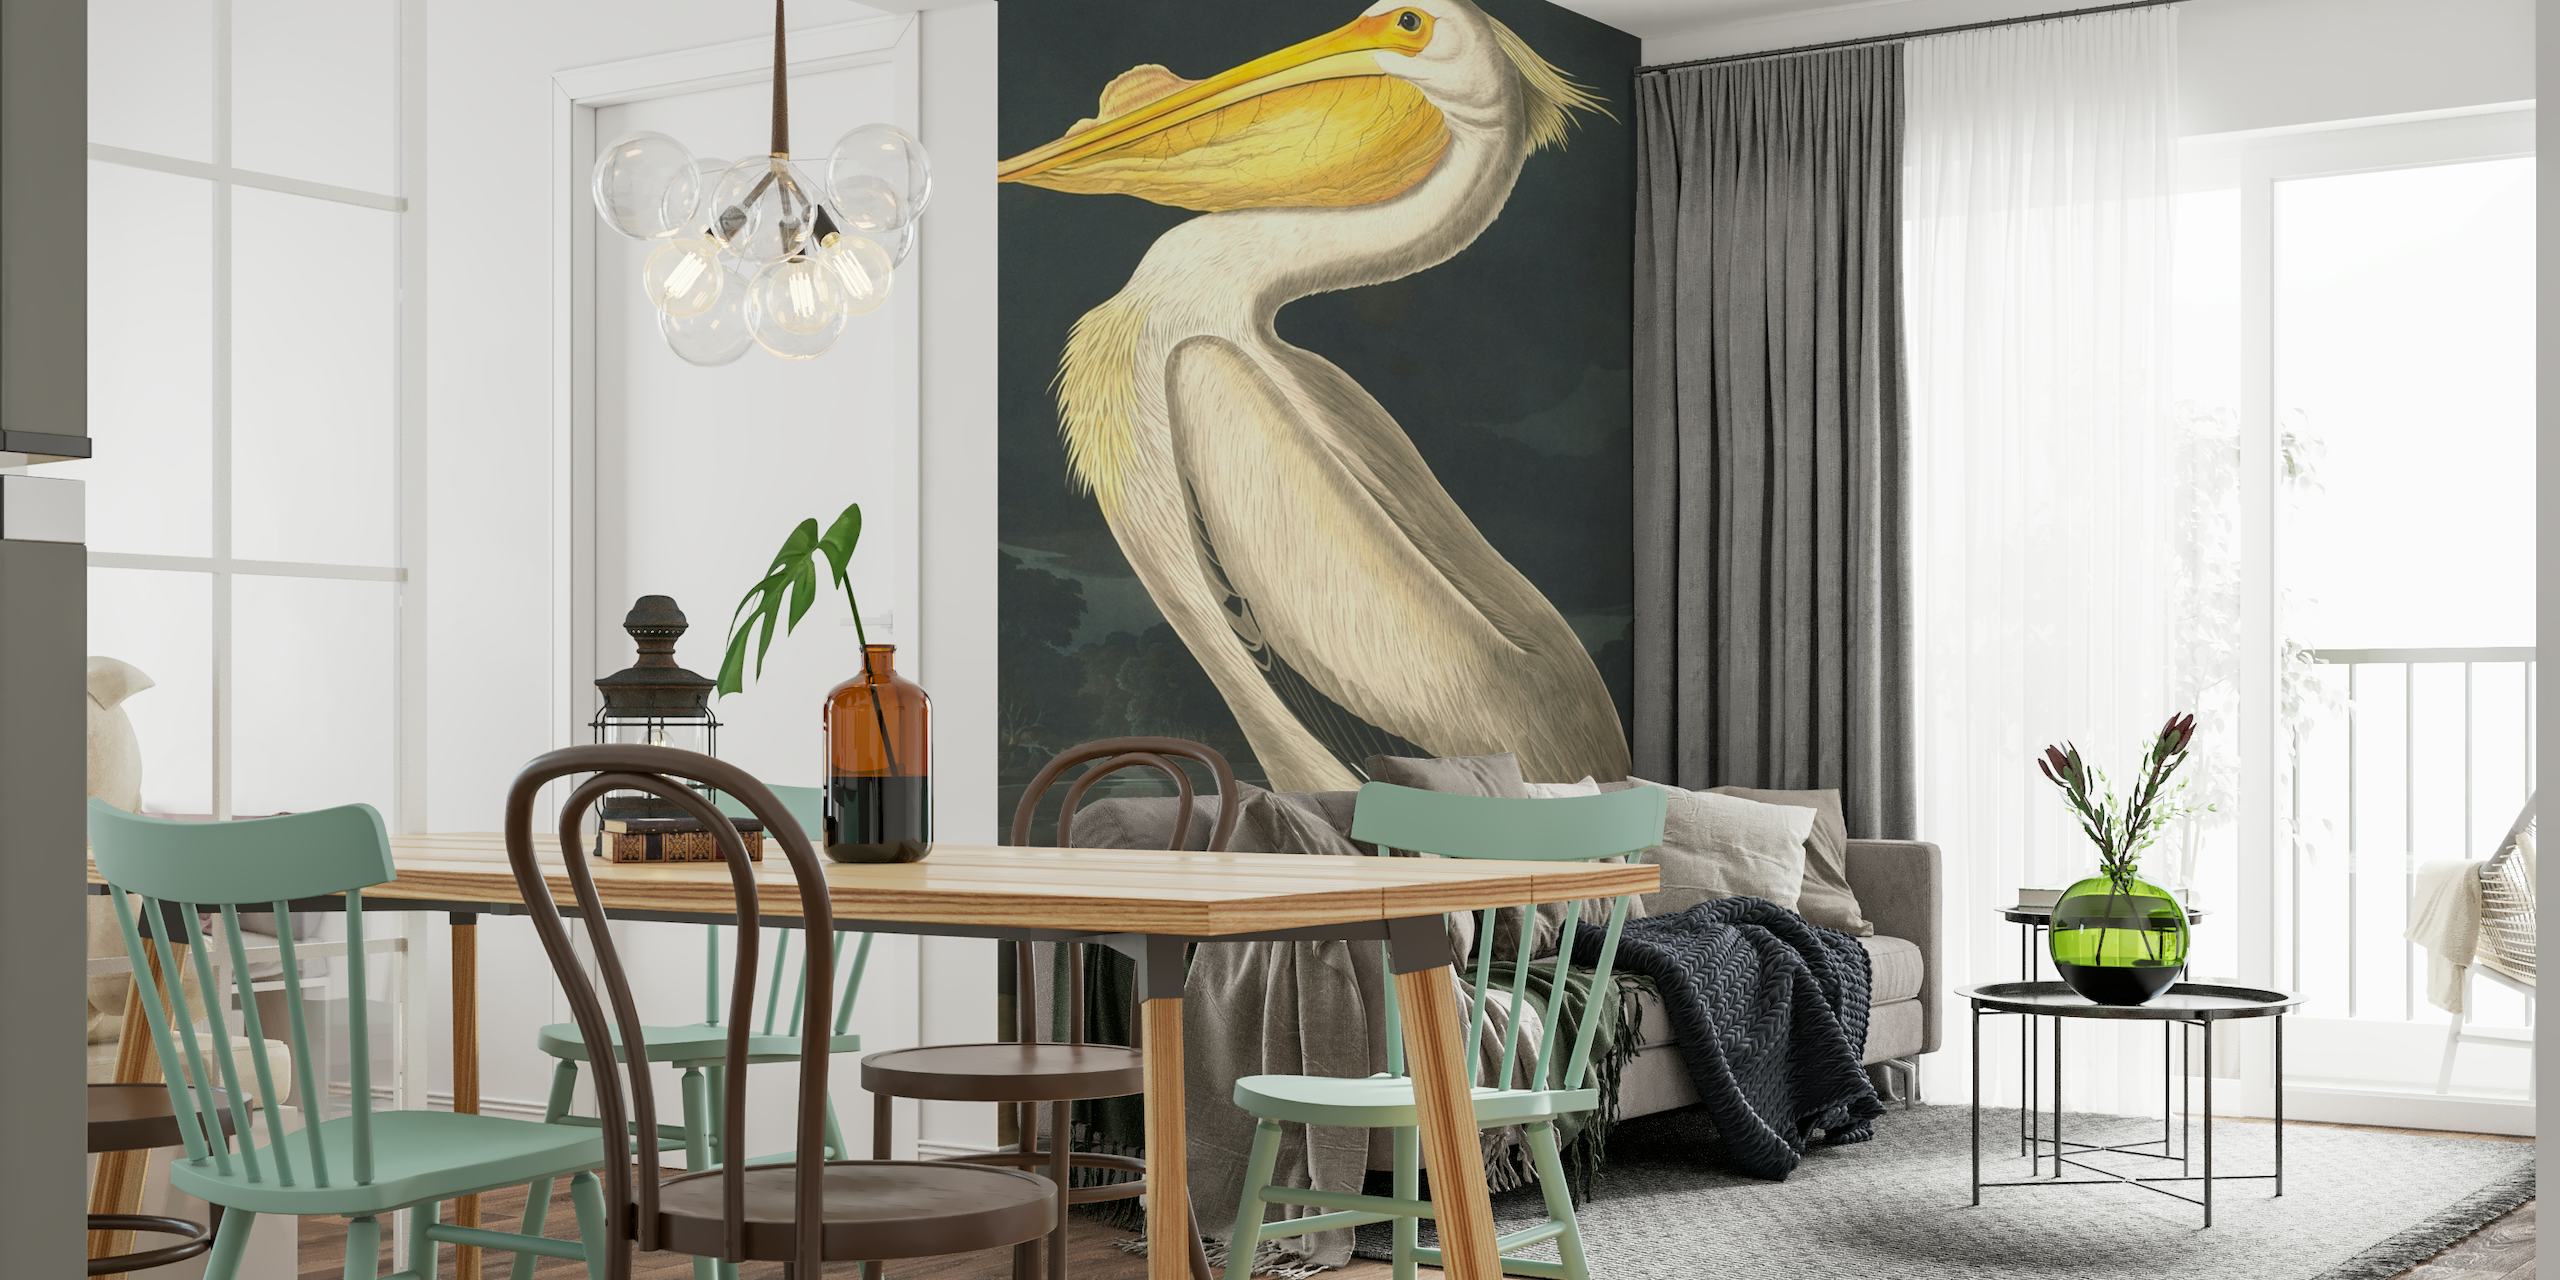 Vintage Pelican at Night wallpaper